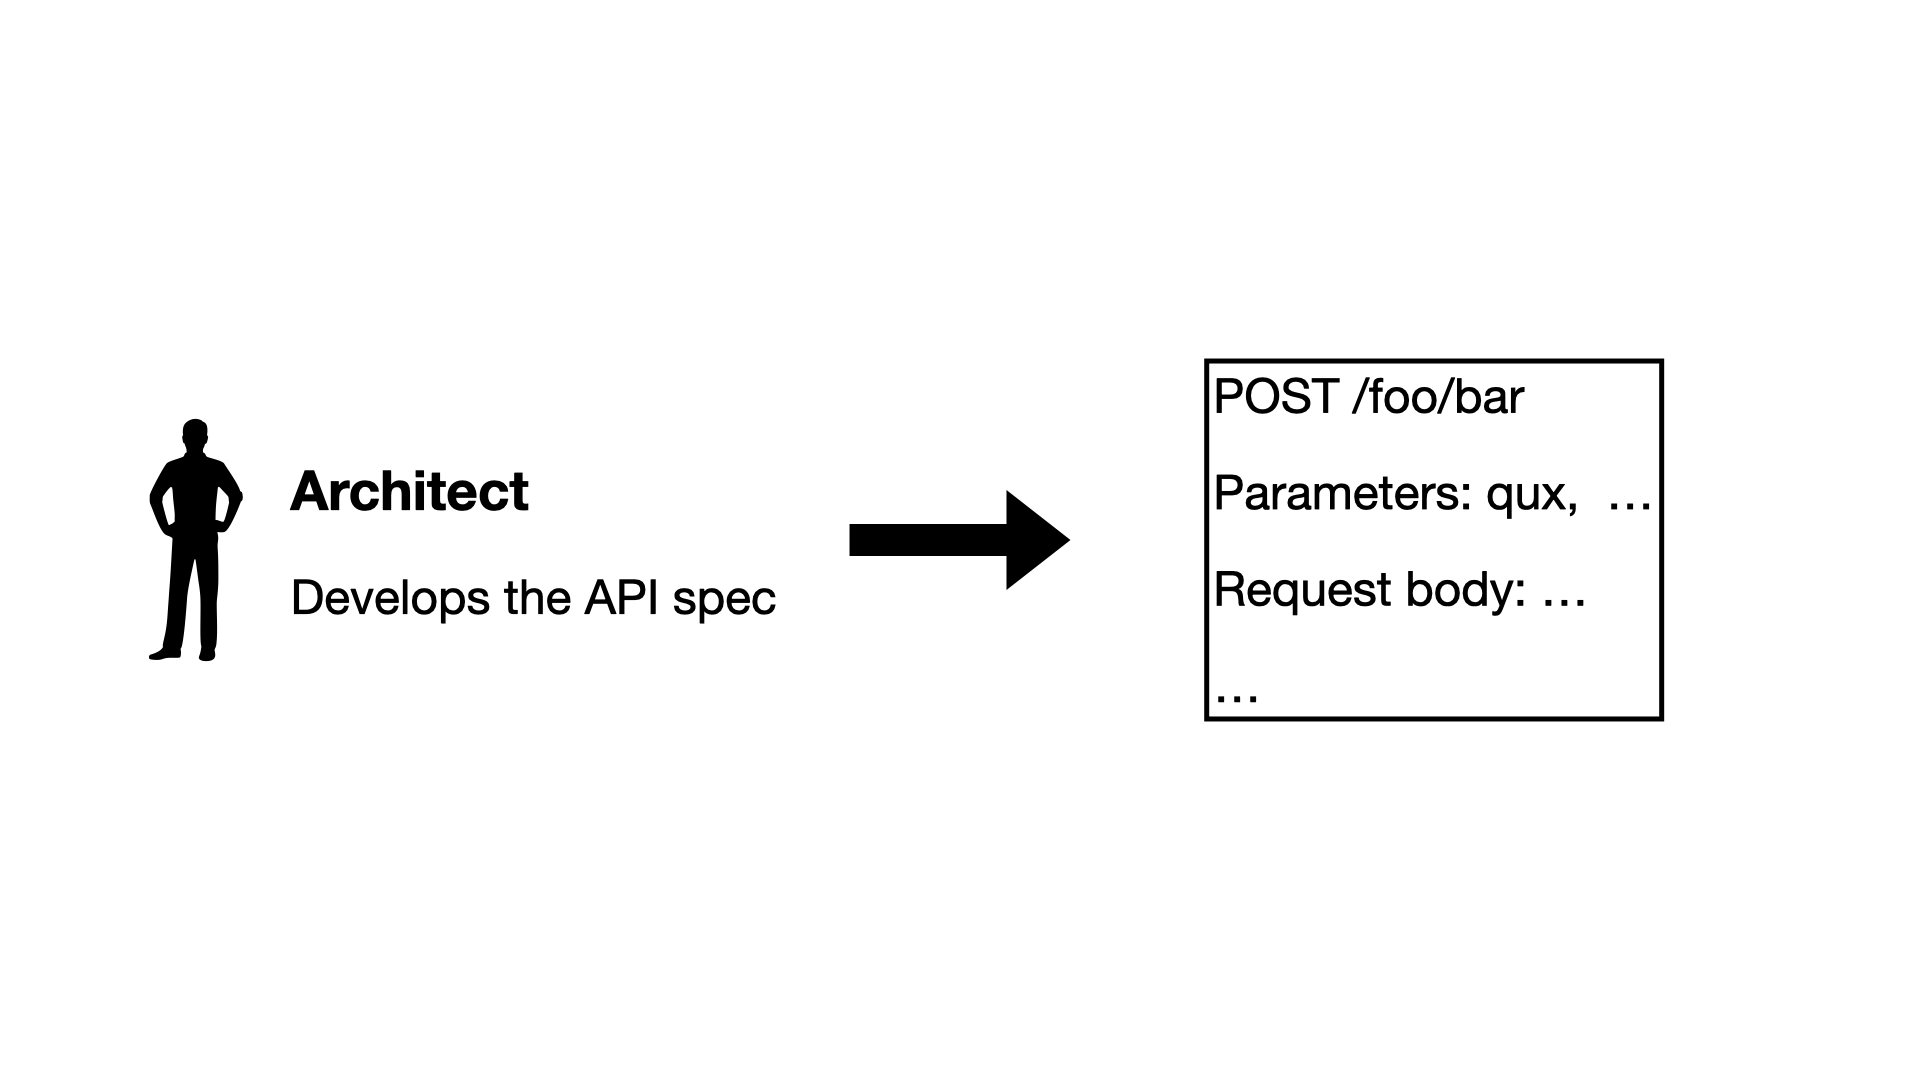 Architect develops the API spec